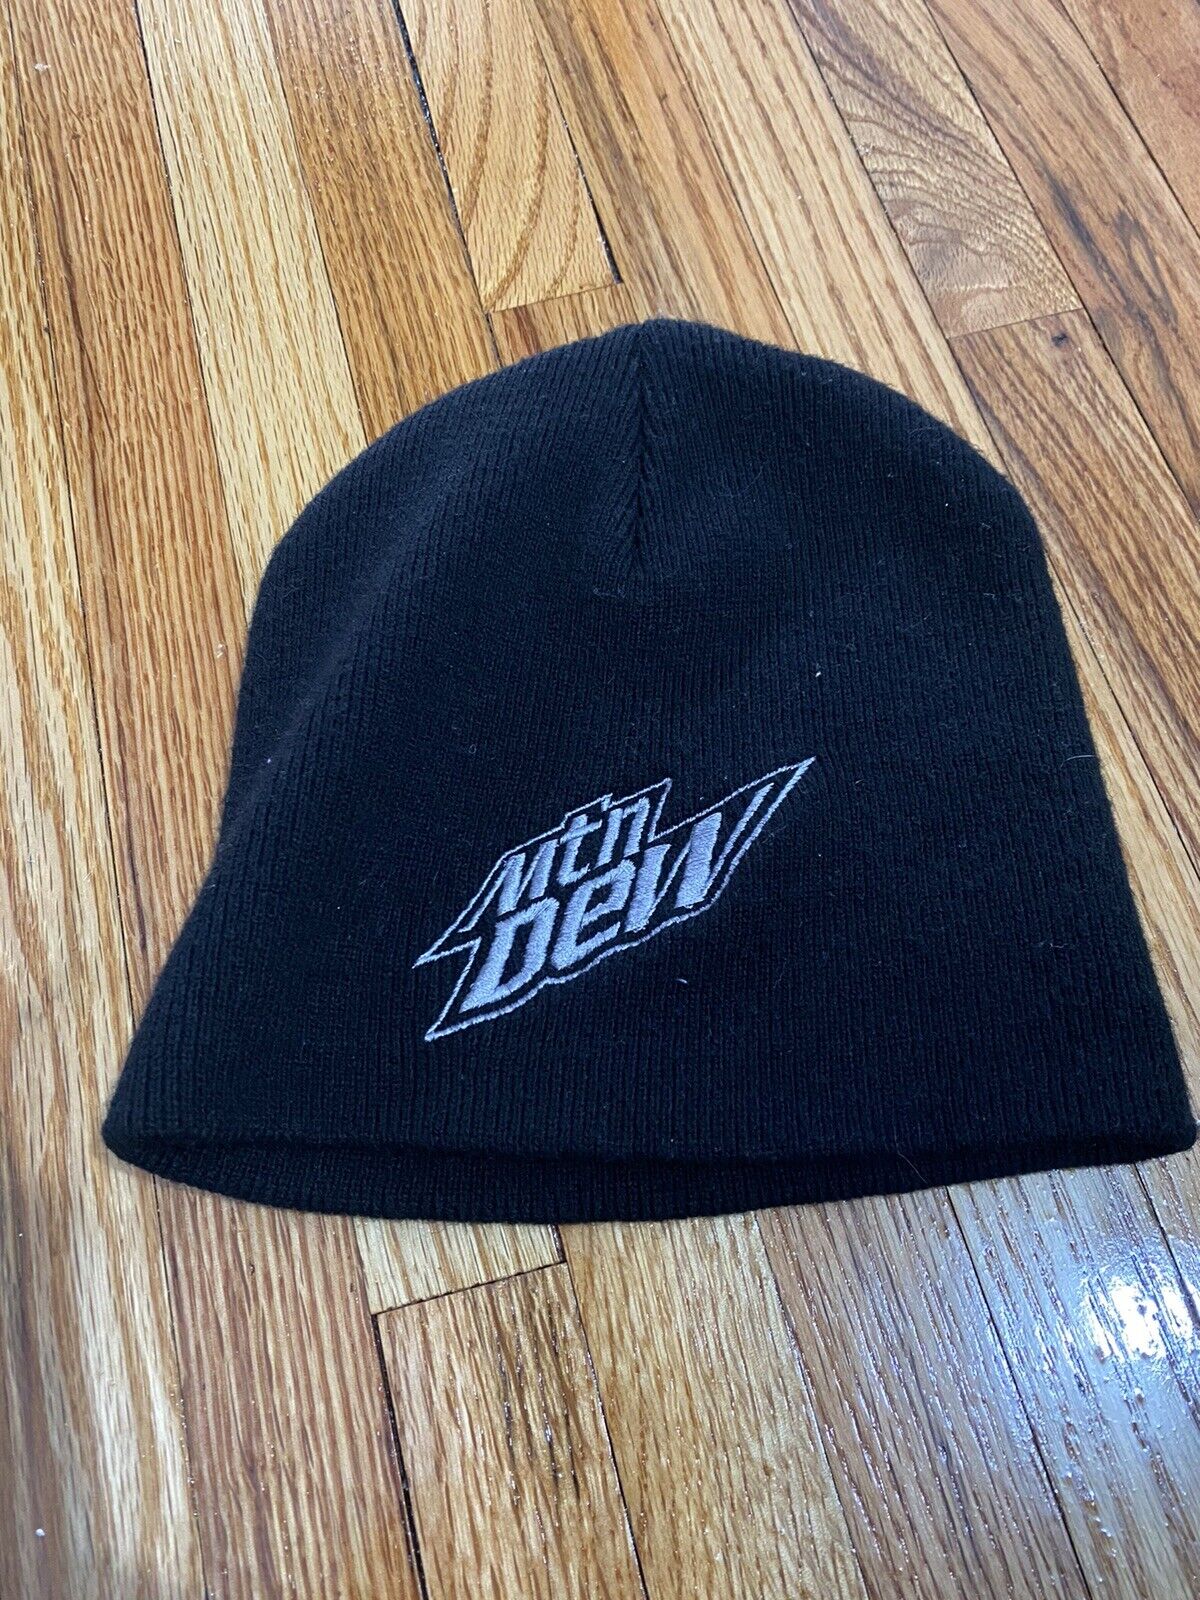 Mountain Dew Pitch Black beanie cap/hat knit winter